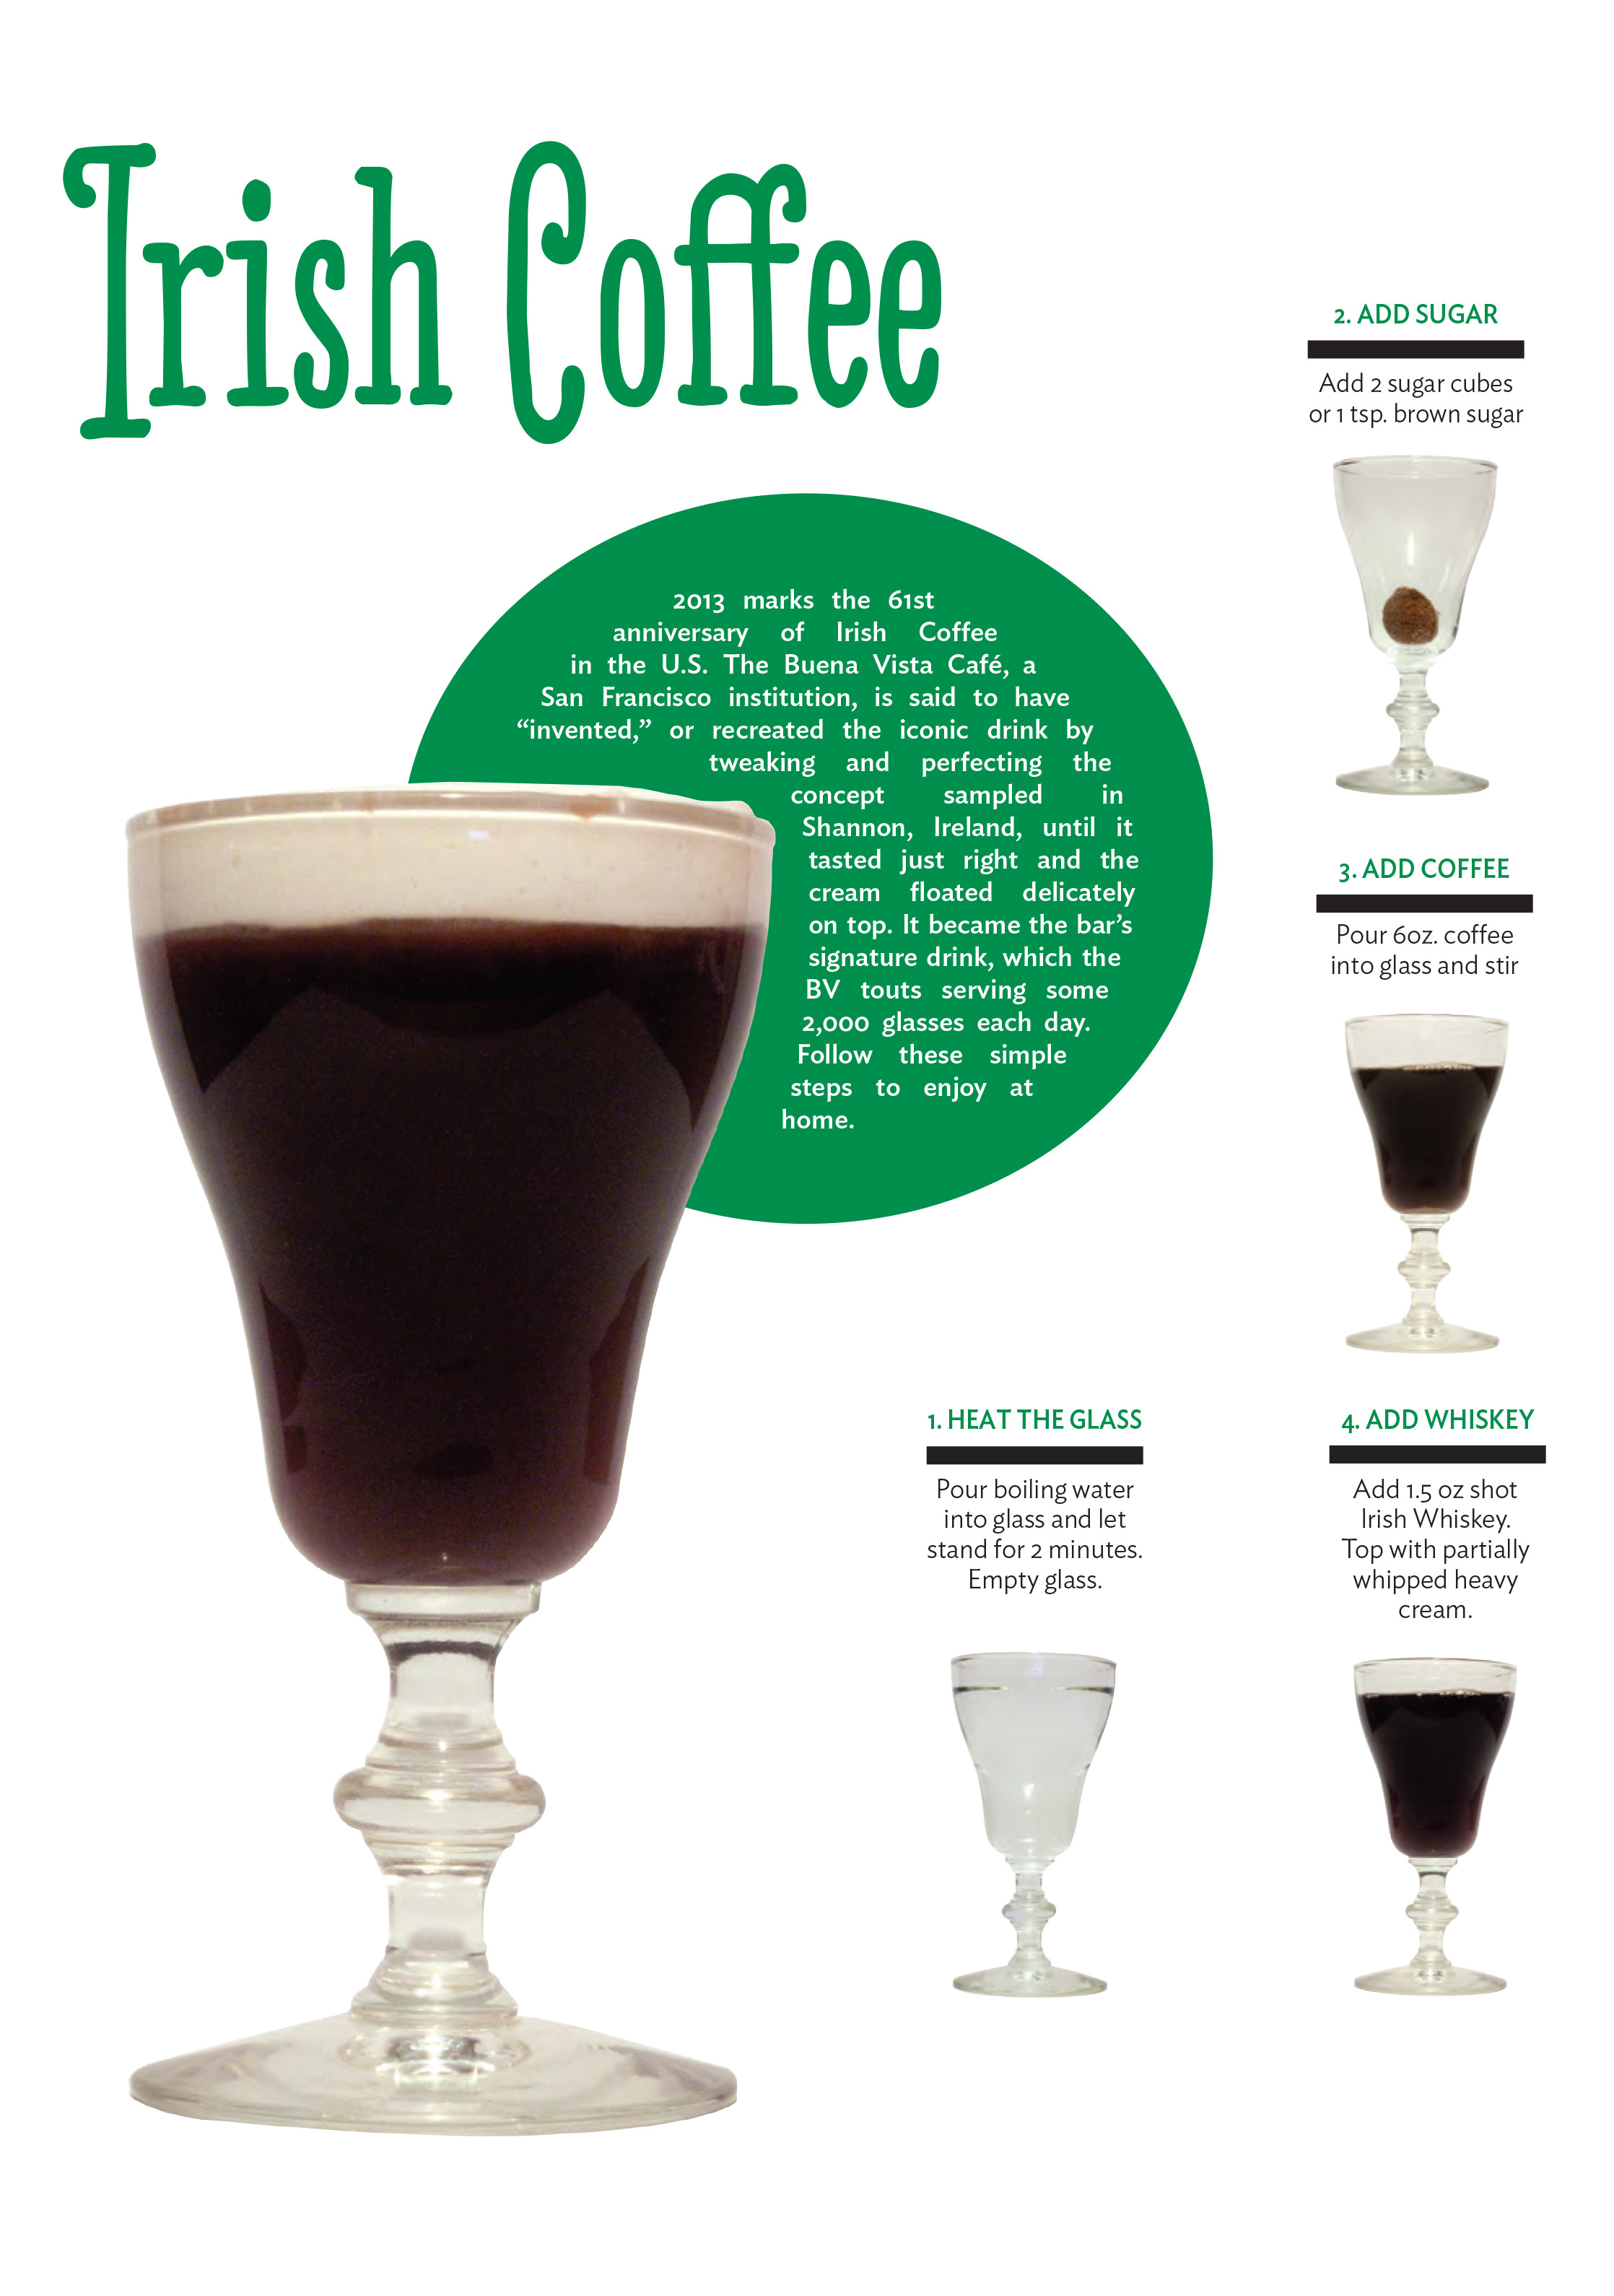 Irish coffee - how to make it